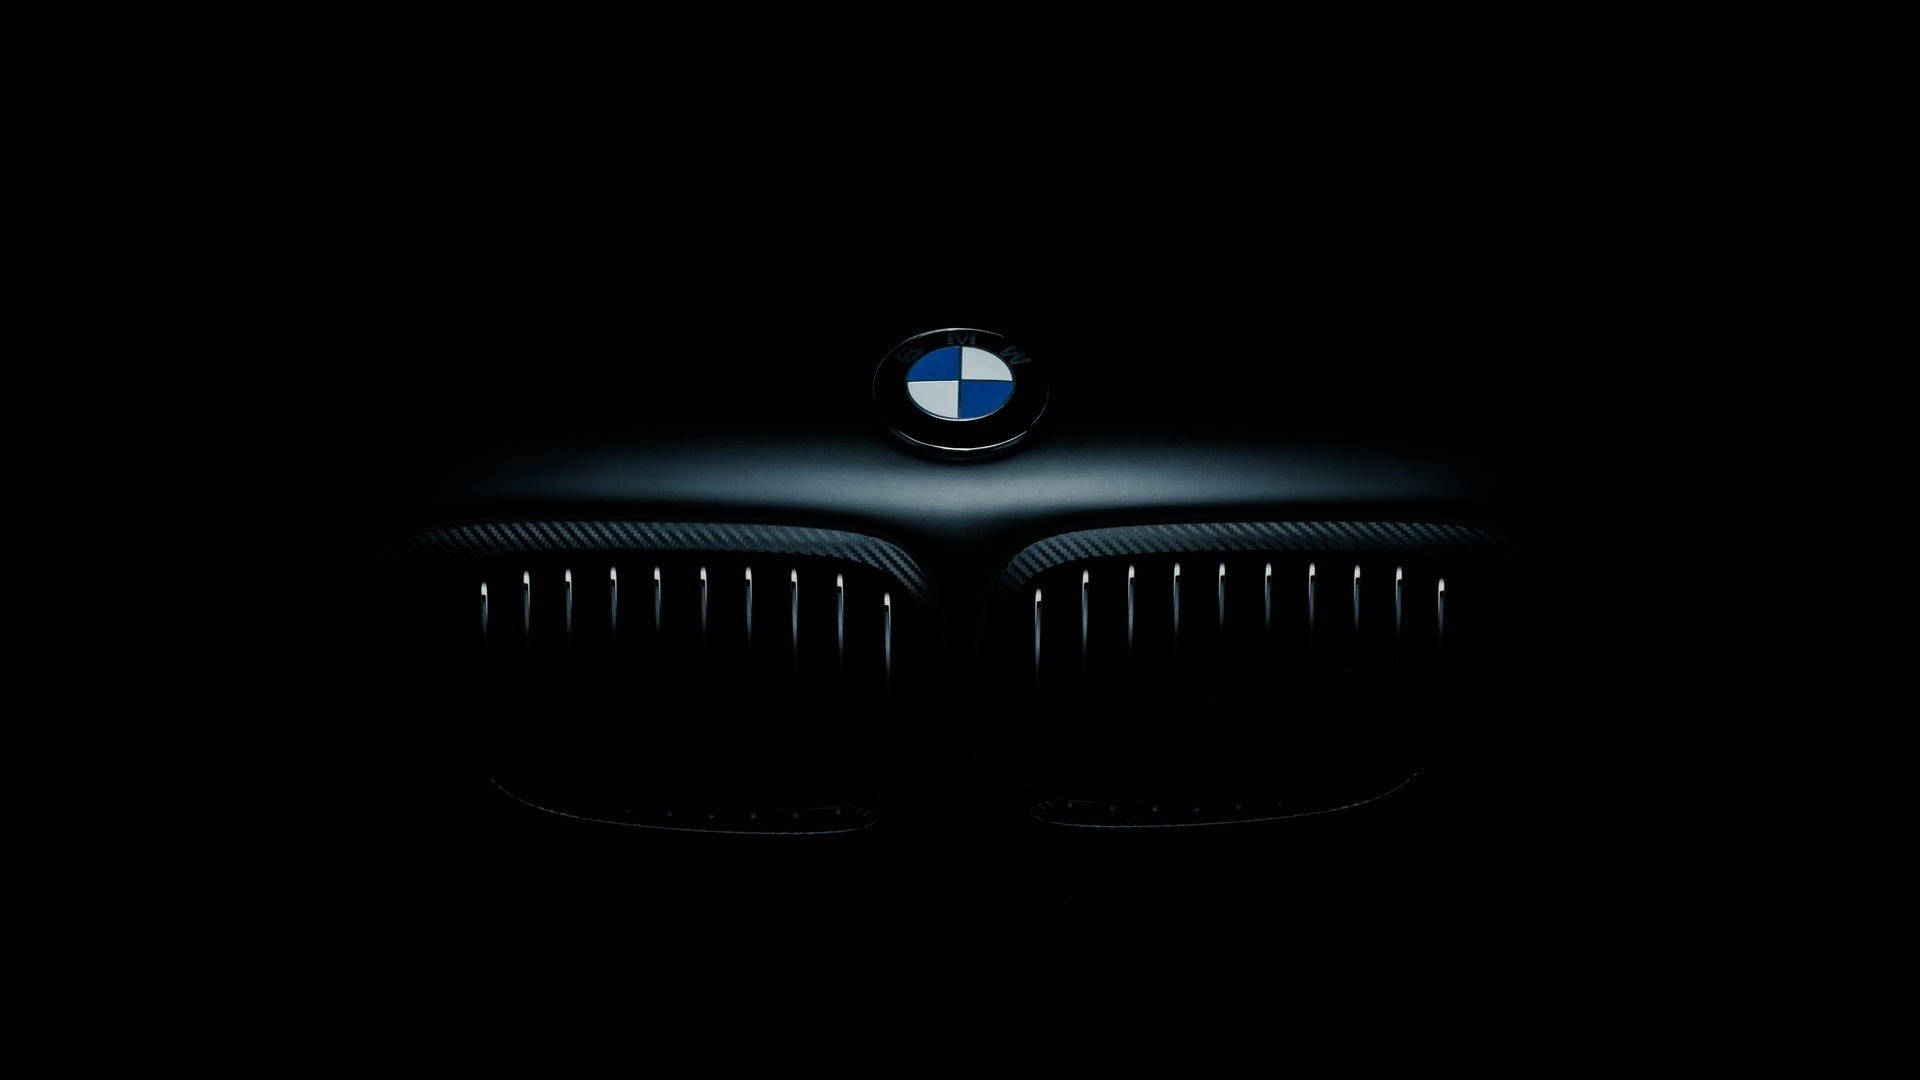 A sleek, black BMW on display in a clean, modern setting. Wallpaper